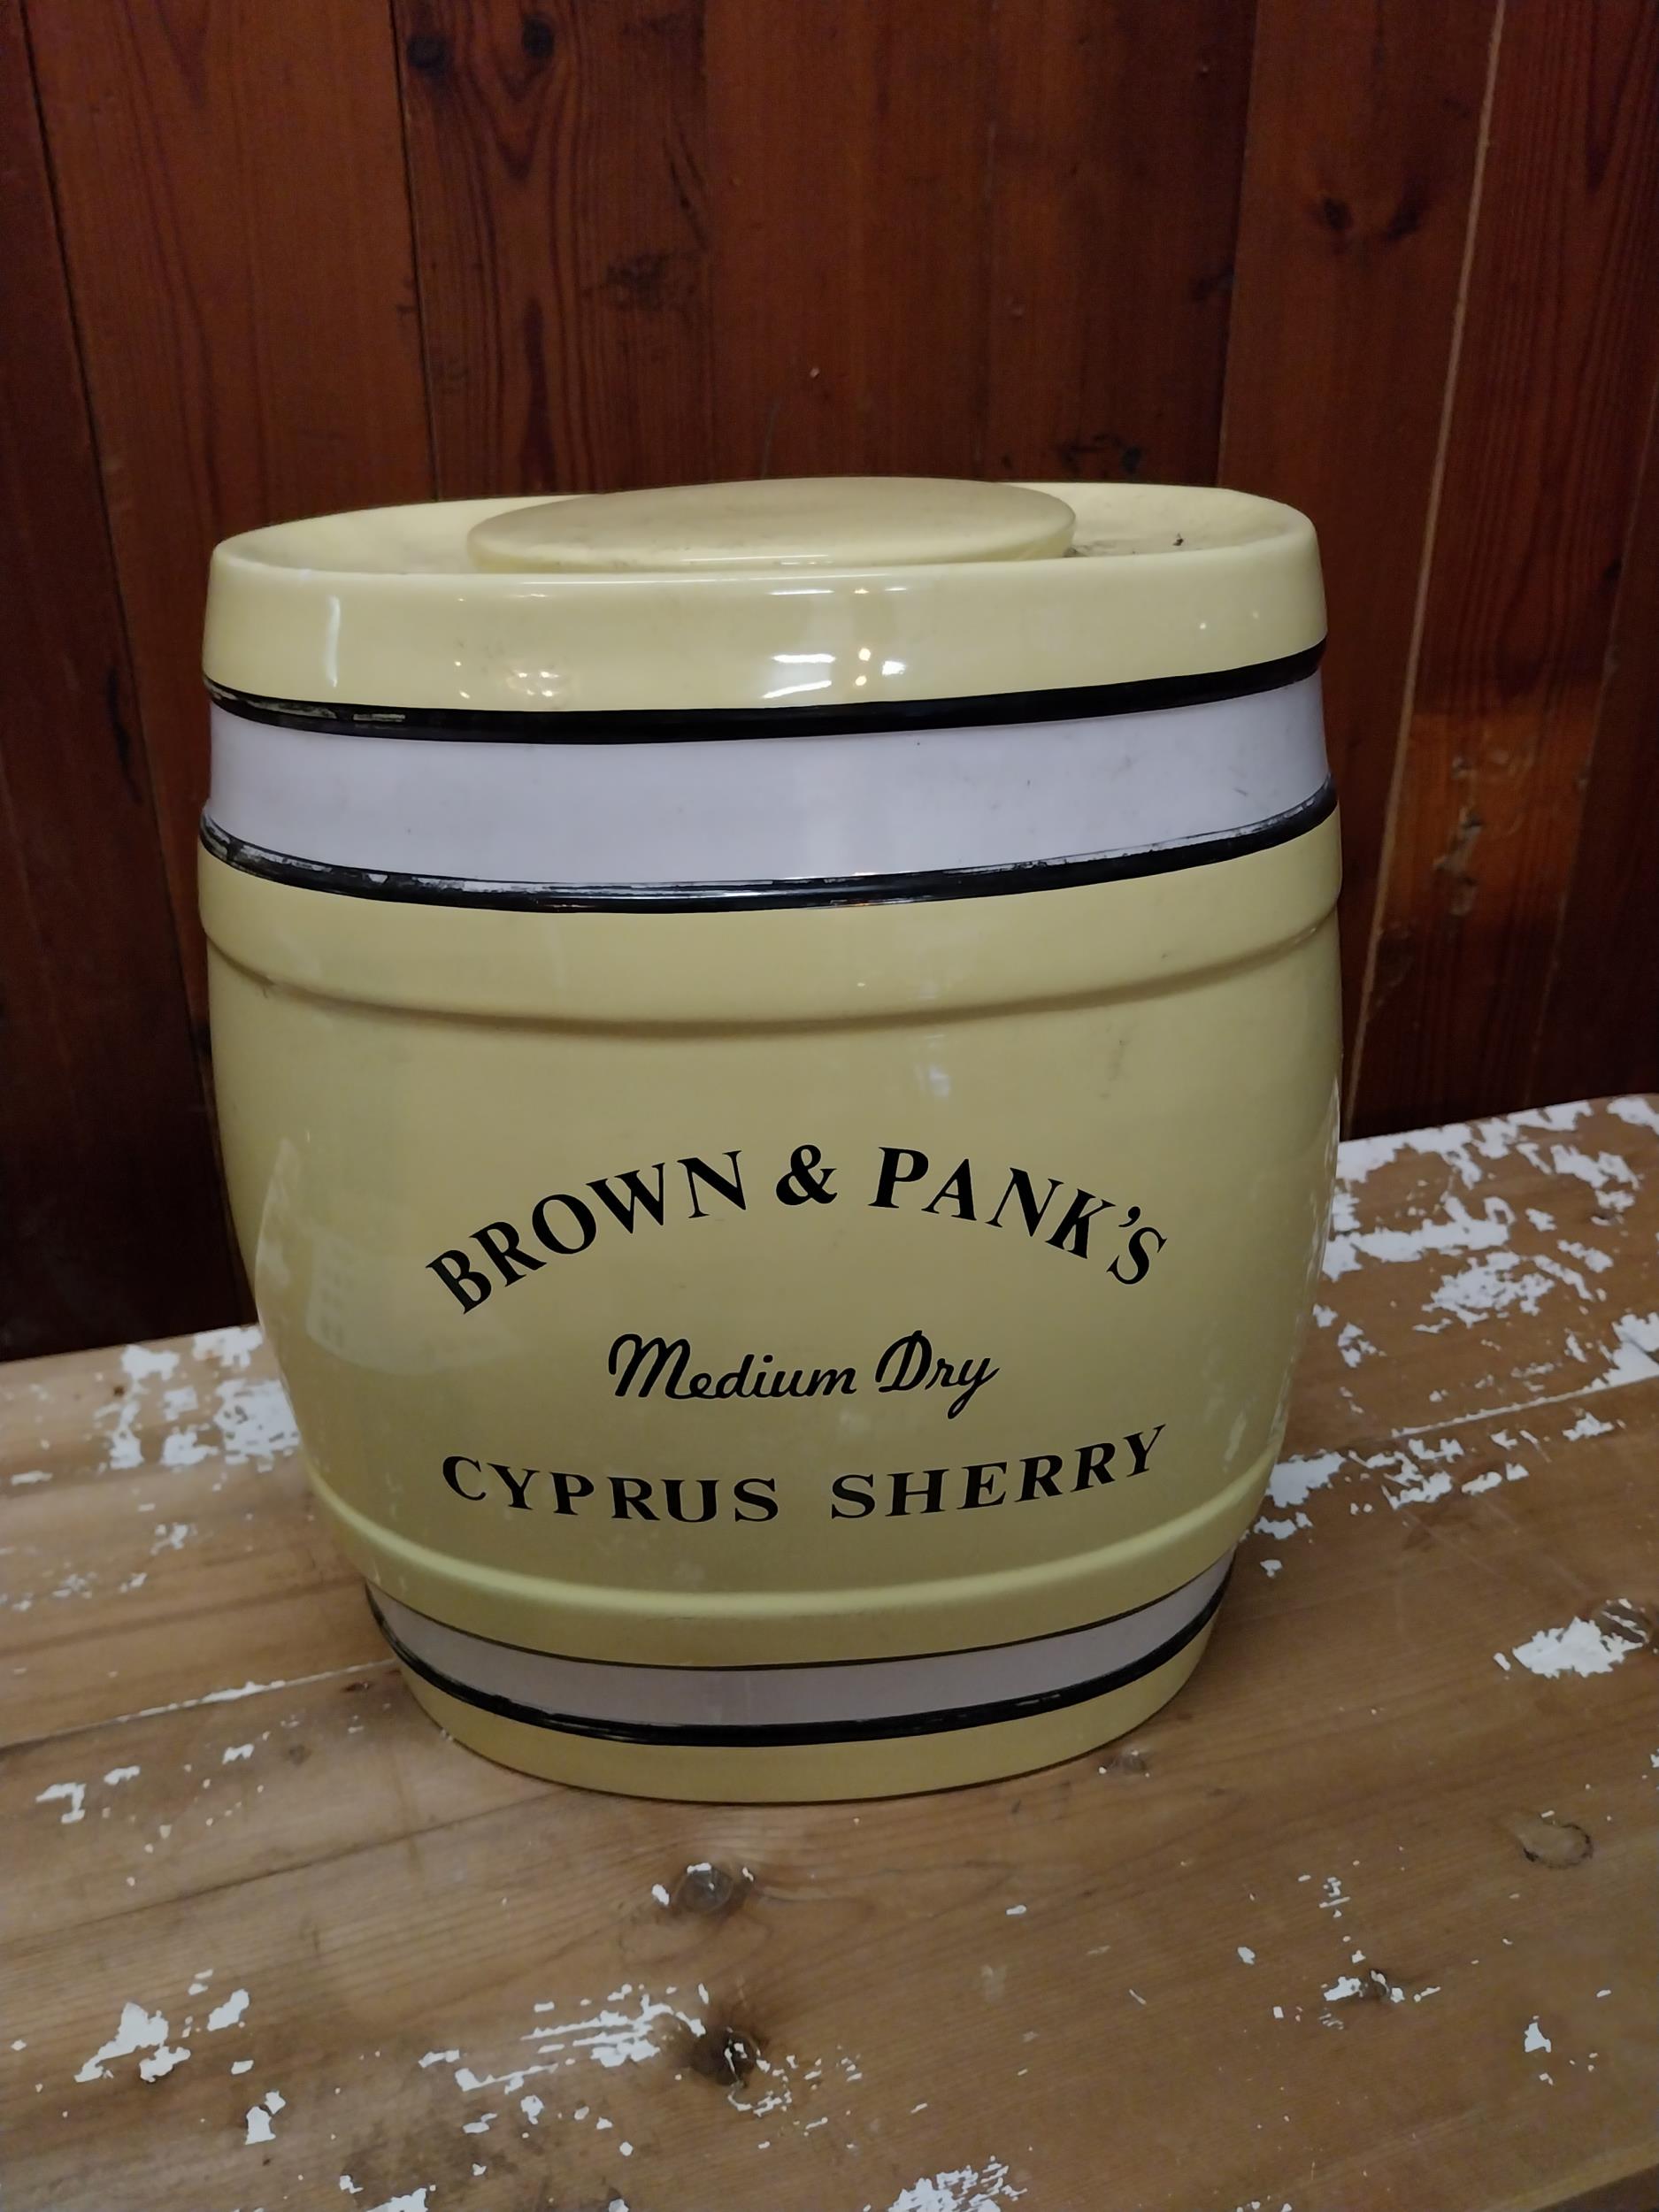 Brown & Pank's Cyprus Sherry ceramic dispenser{30 cm H x 30 cm W x 22 cm D}. - Image 3 of 3